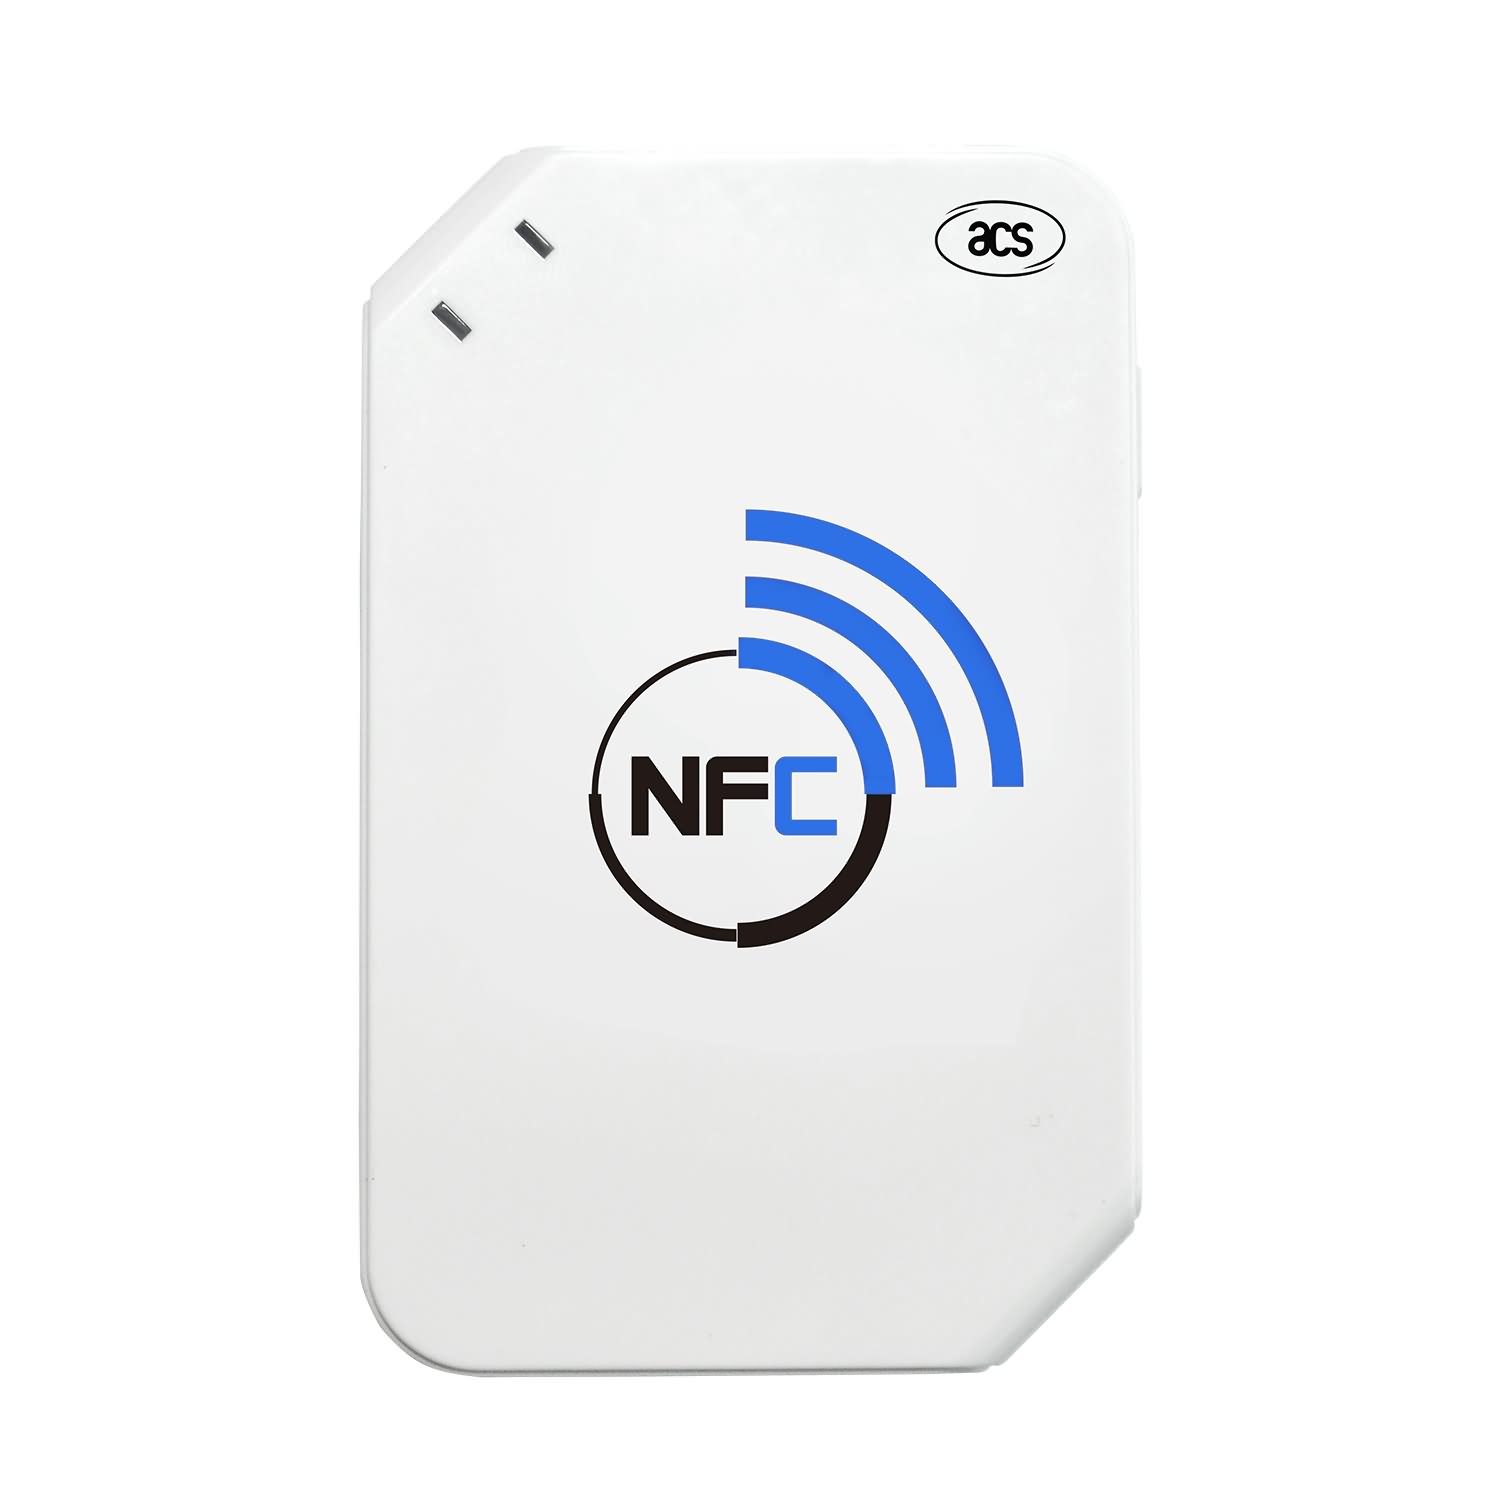 ACR1255U-J1 ACS Secure Bluetooth® NFC Reader Featured Image